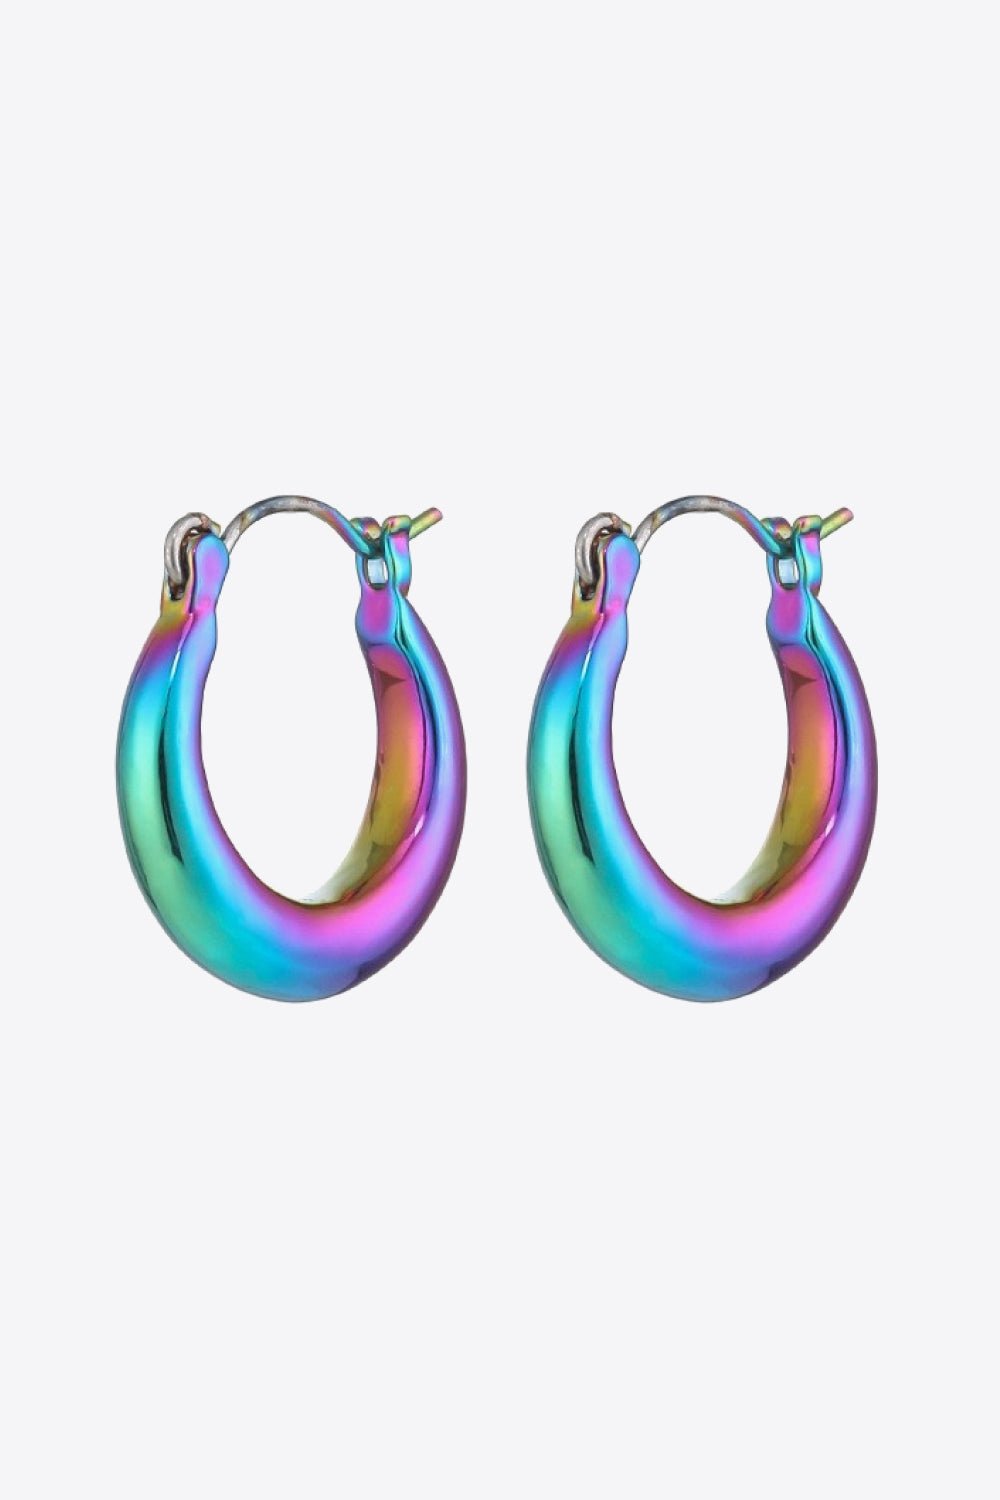 Darling Heart Multicolored Huggie Earrings - London's Closet Boutique